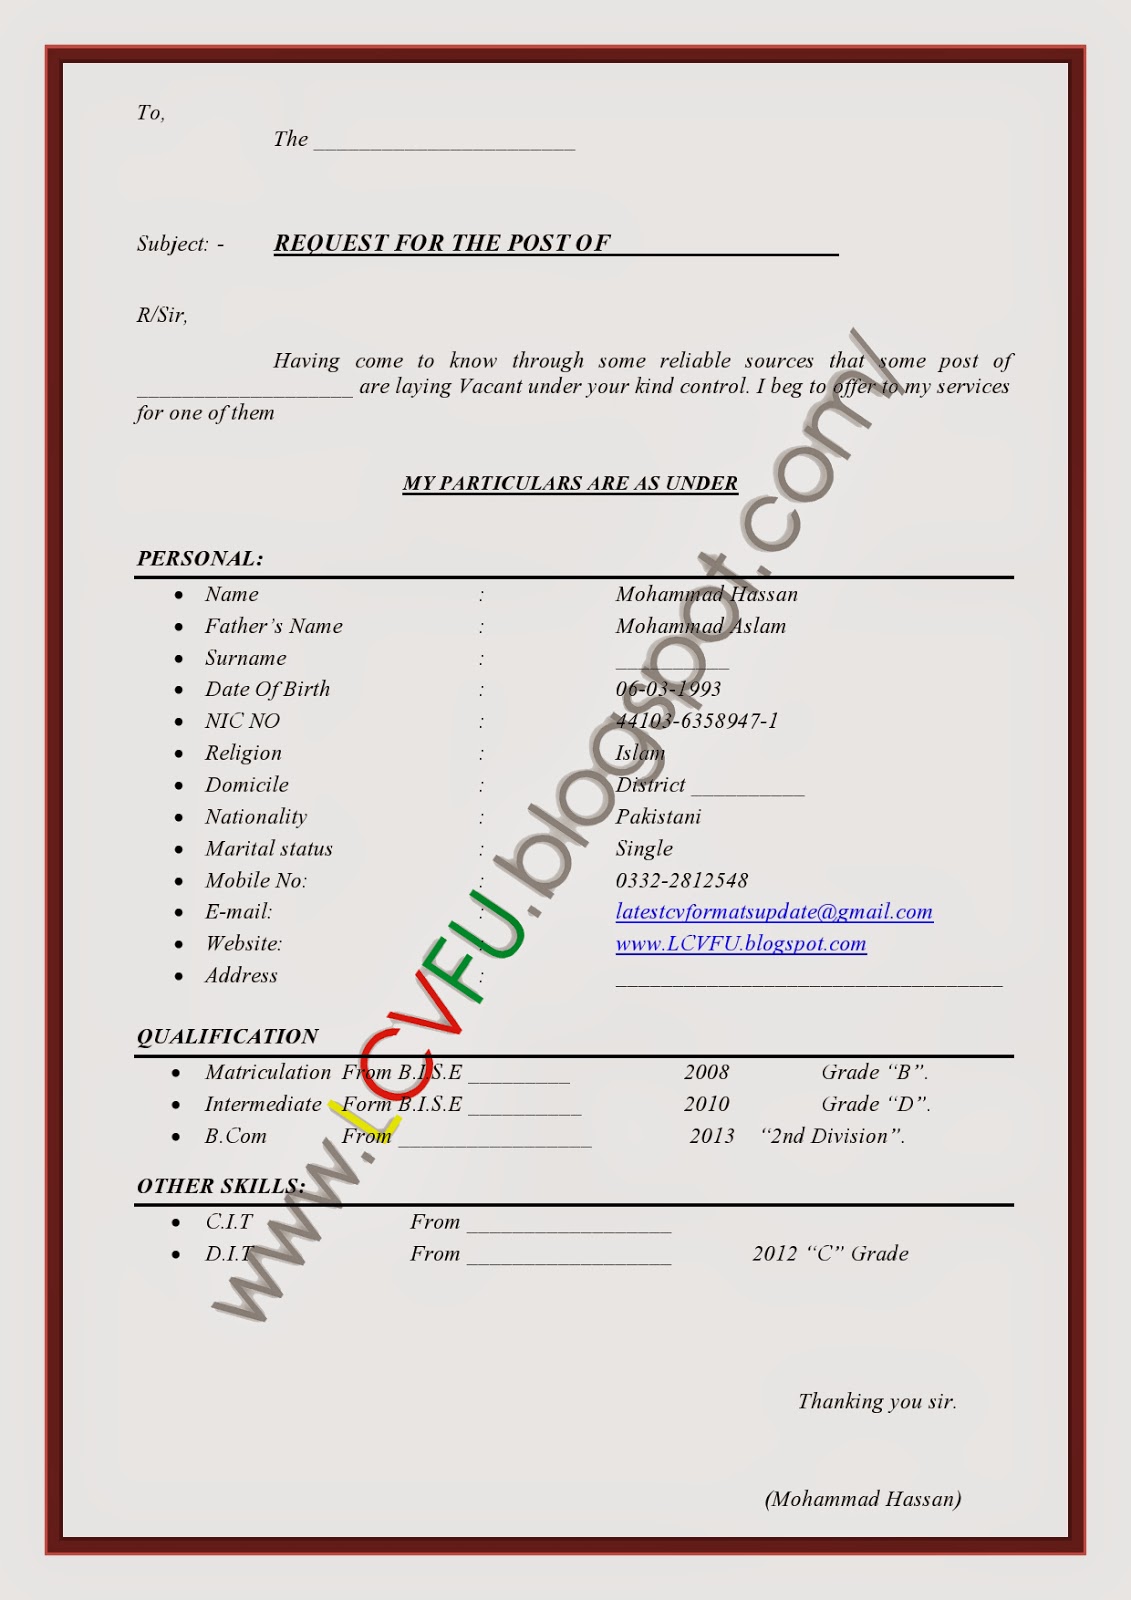 New Curriculum Vitae Format 2014 Sri Lanka Writing Paper